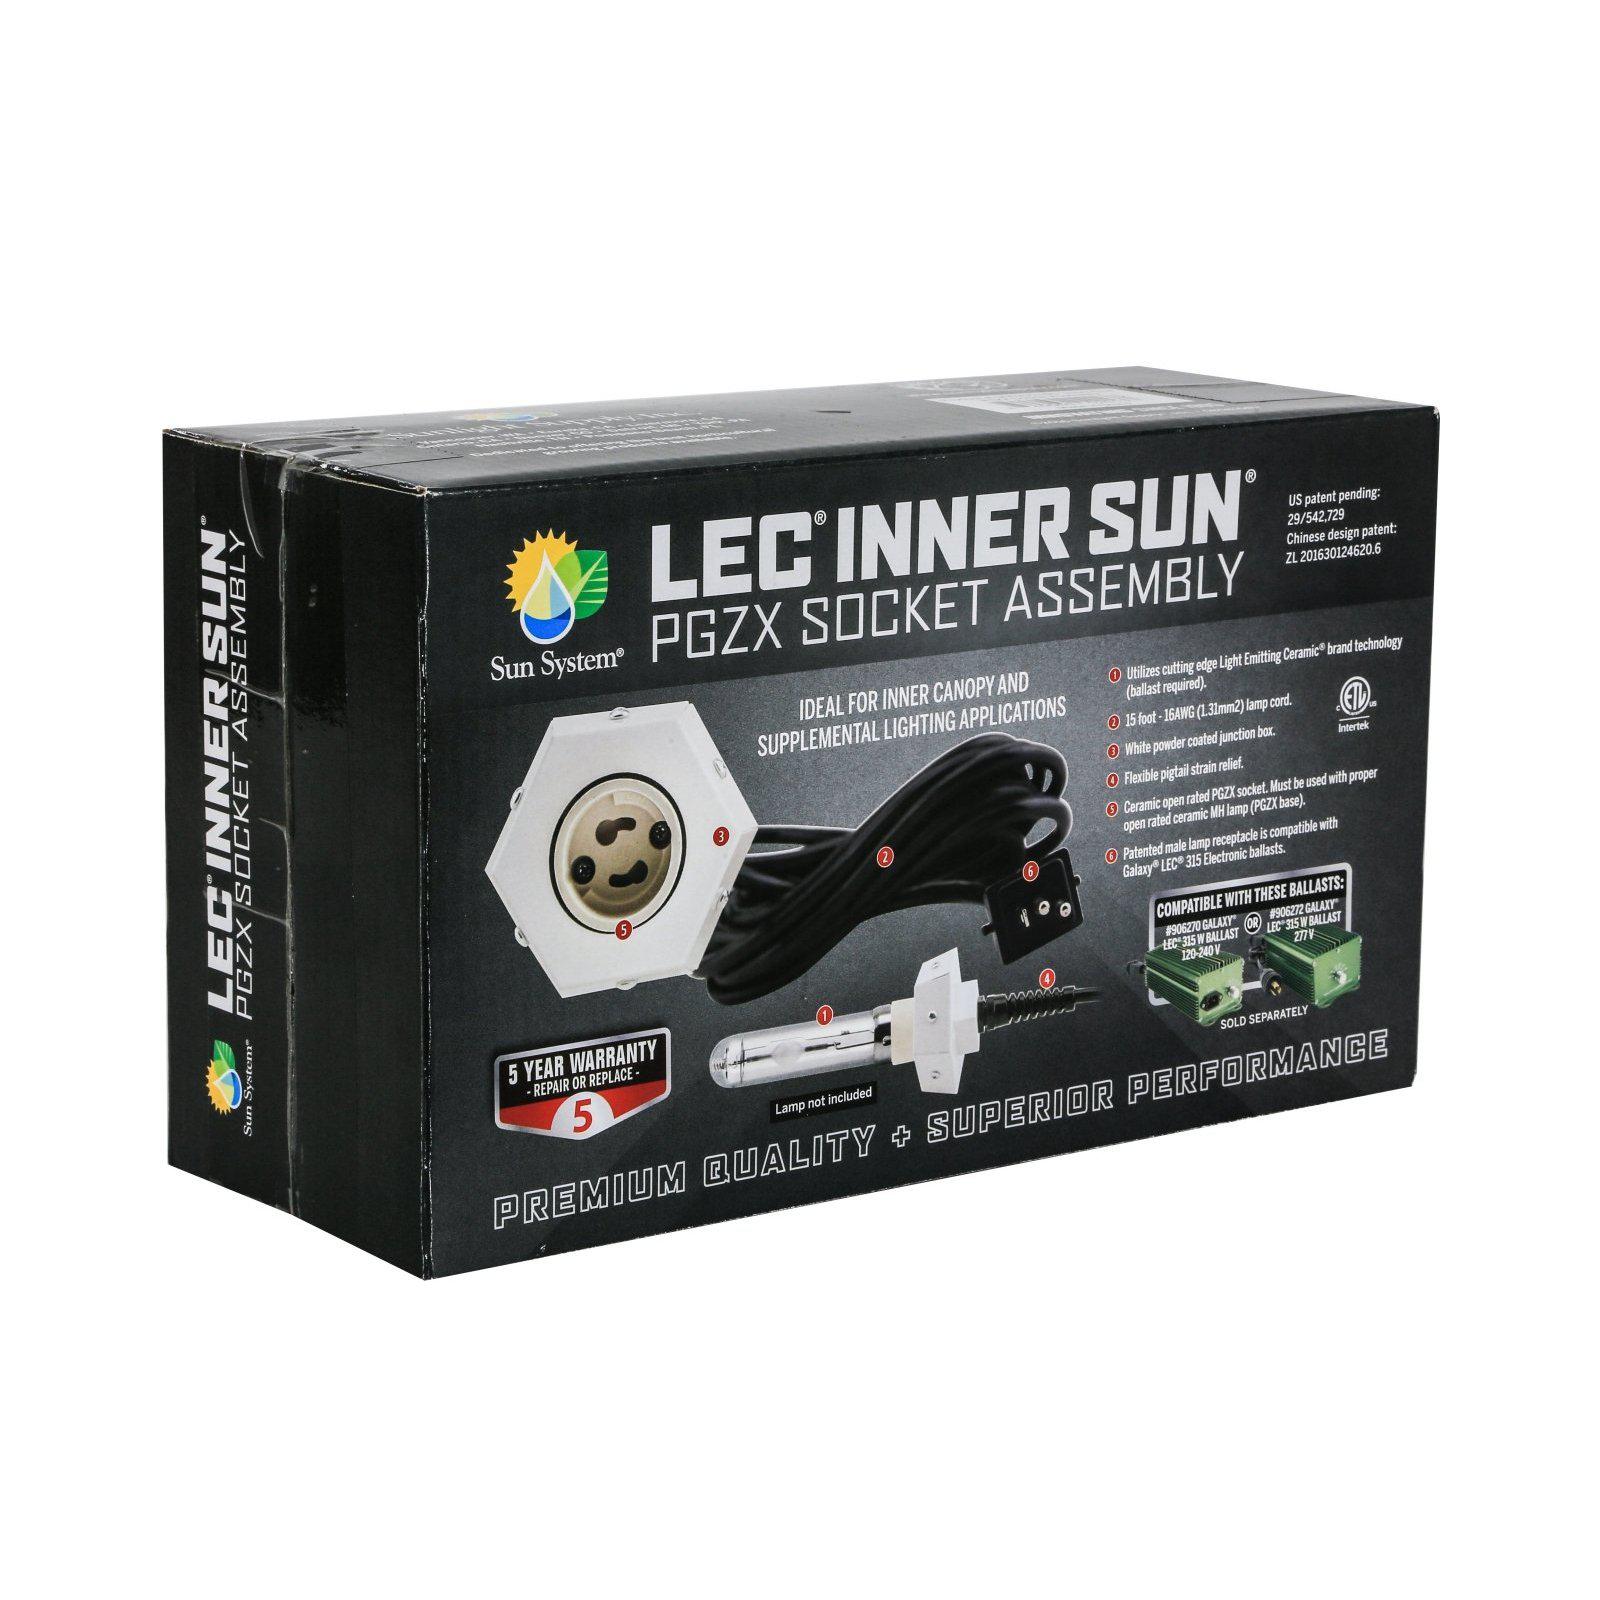 Lighting - Sun System LEC Inner Sun PGZX Socket Assembly - 849969020137- Gardin Warehouse